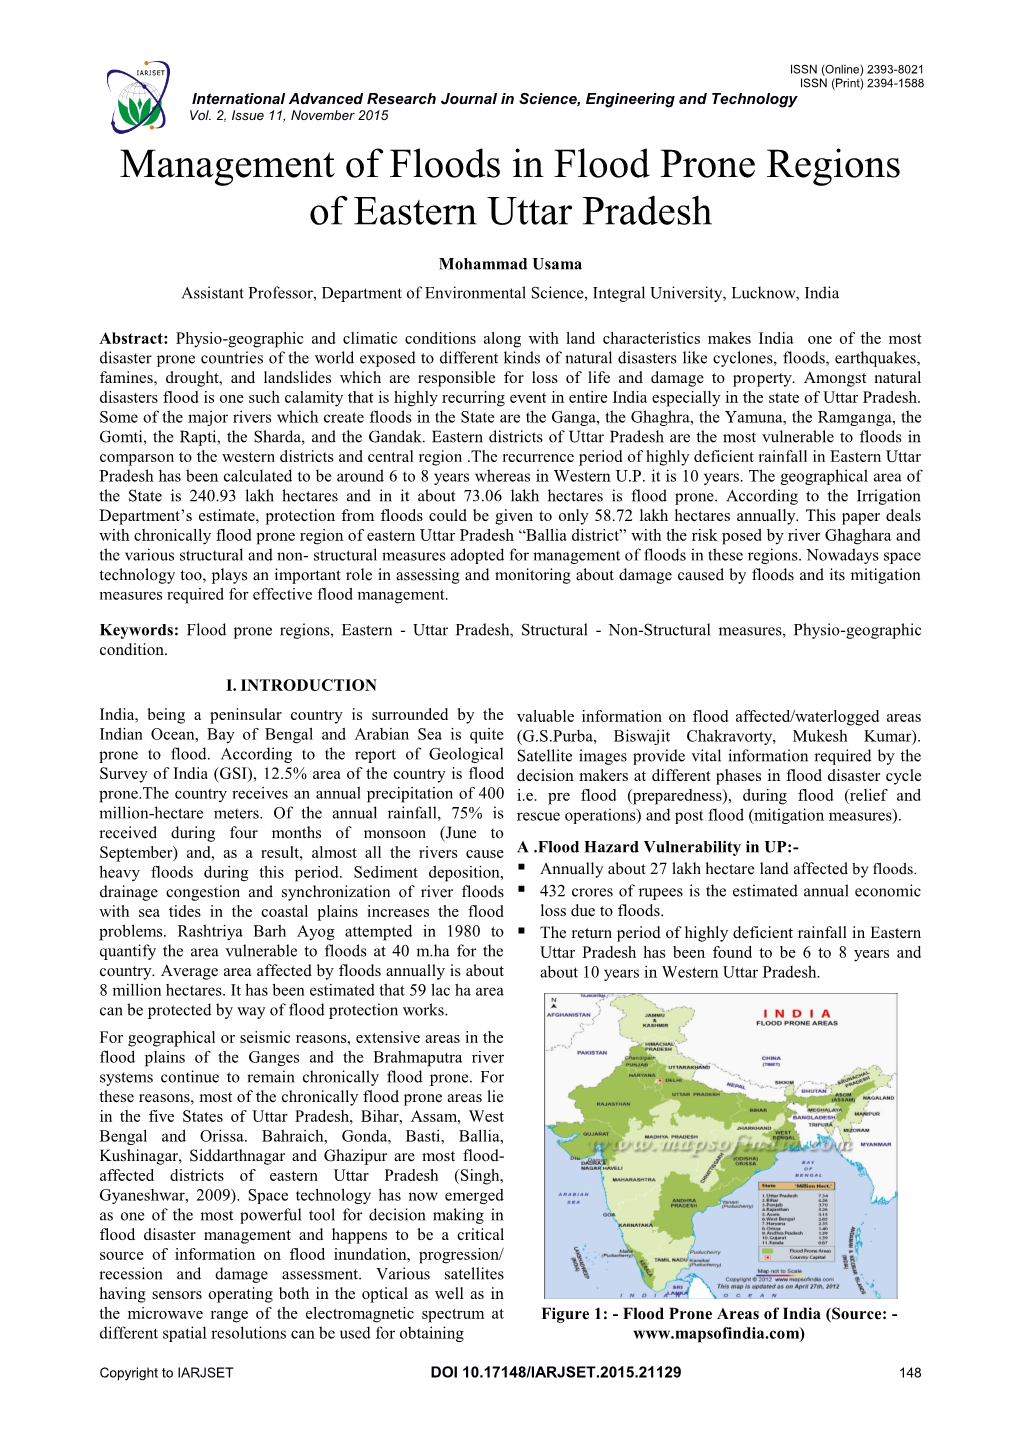 Management of Floods in Flood Prone Regions of Eastern Uttar Pradesh